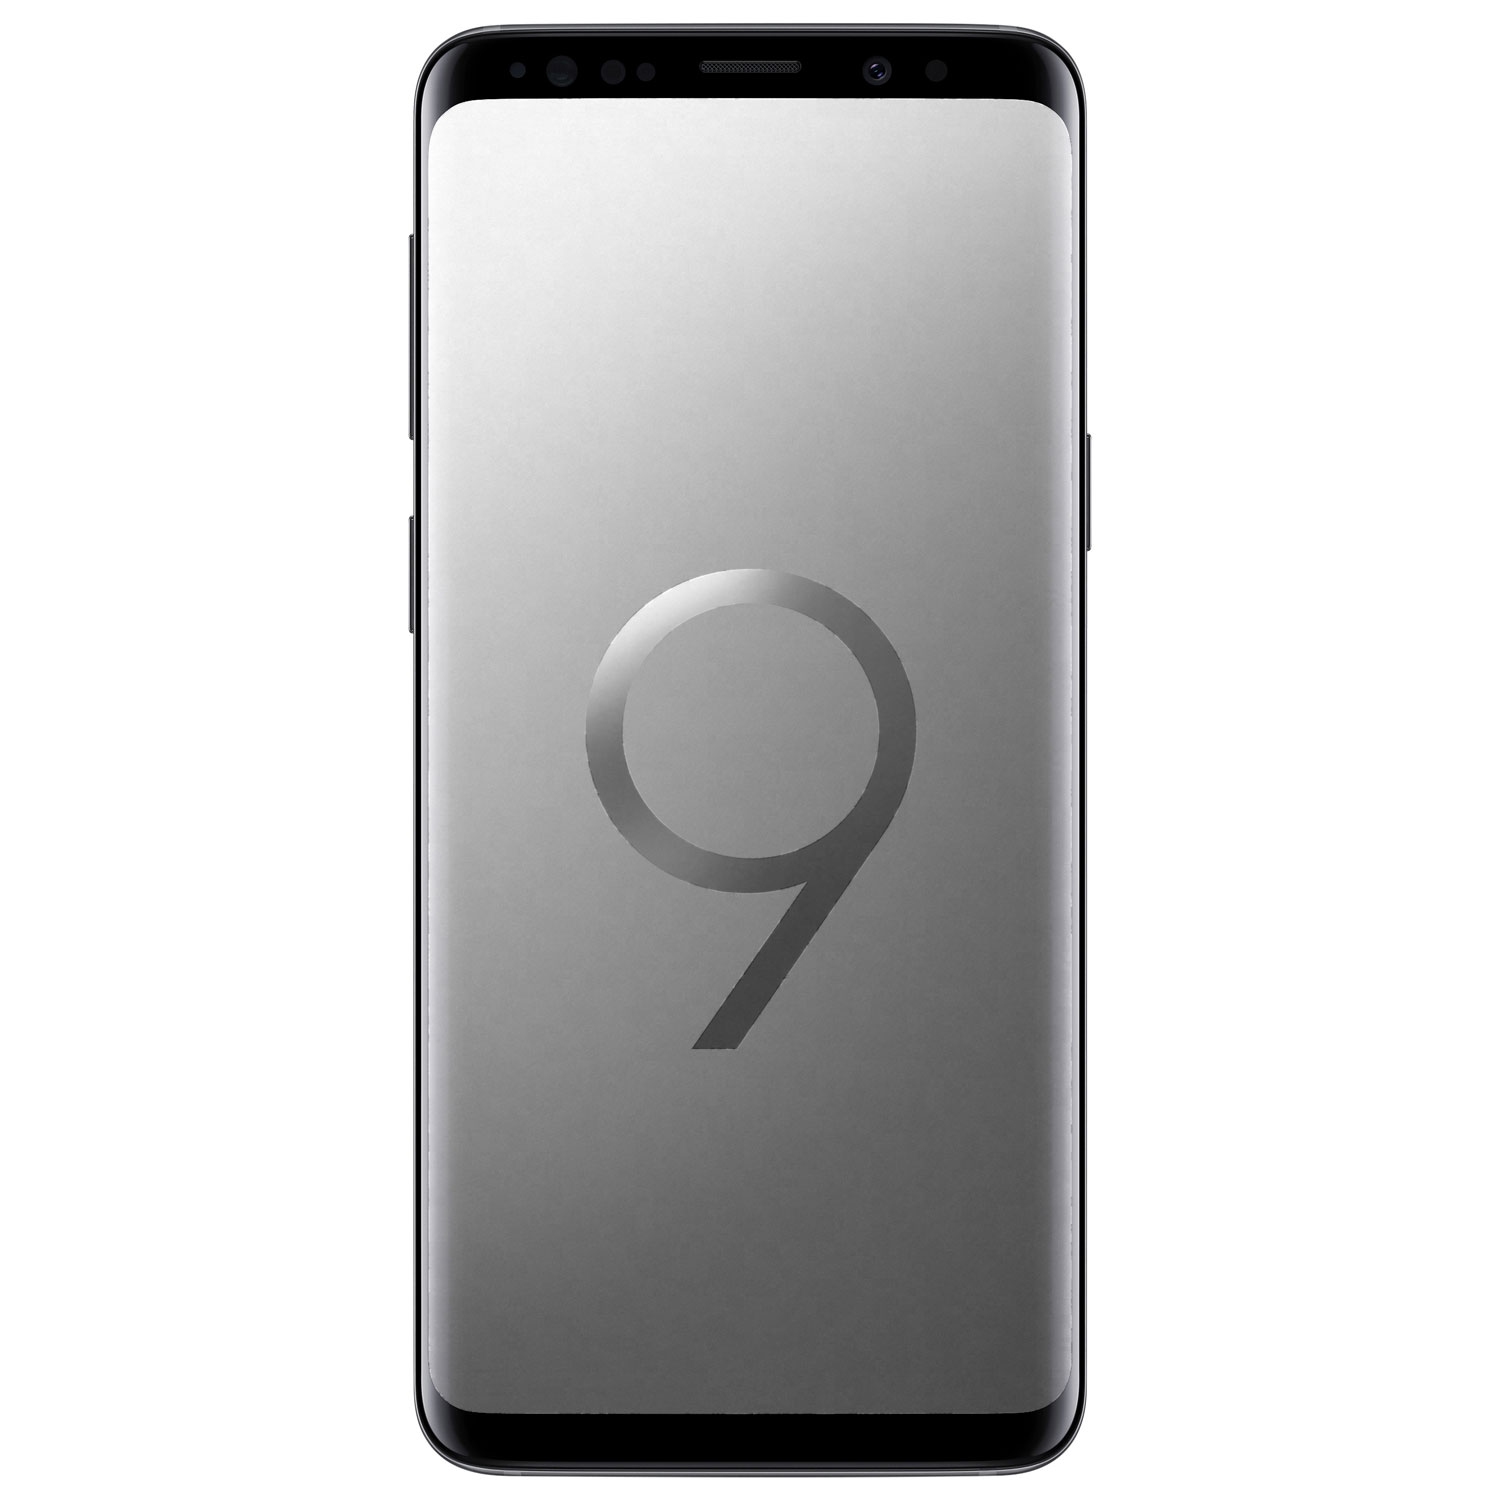 Samsung Galaxy S9 64GB Smartphone - Titanium Grey - Unlocked - Open Box